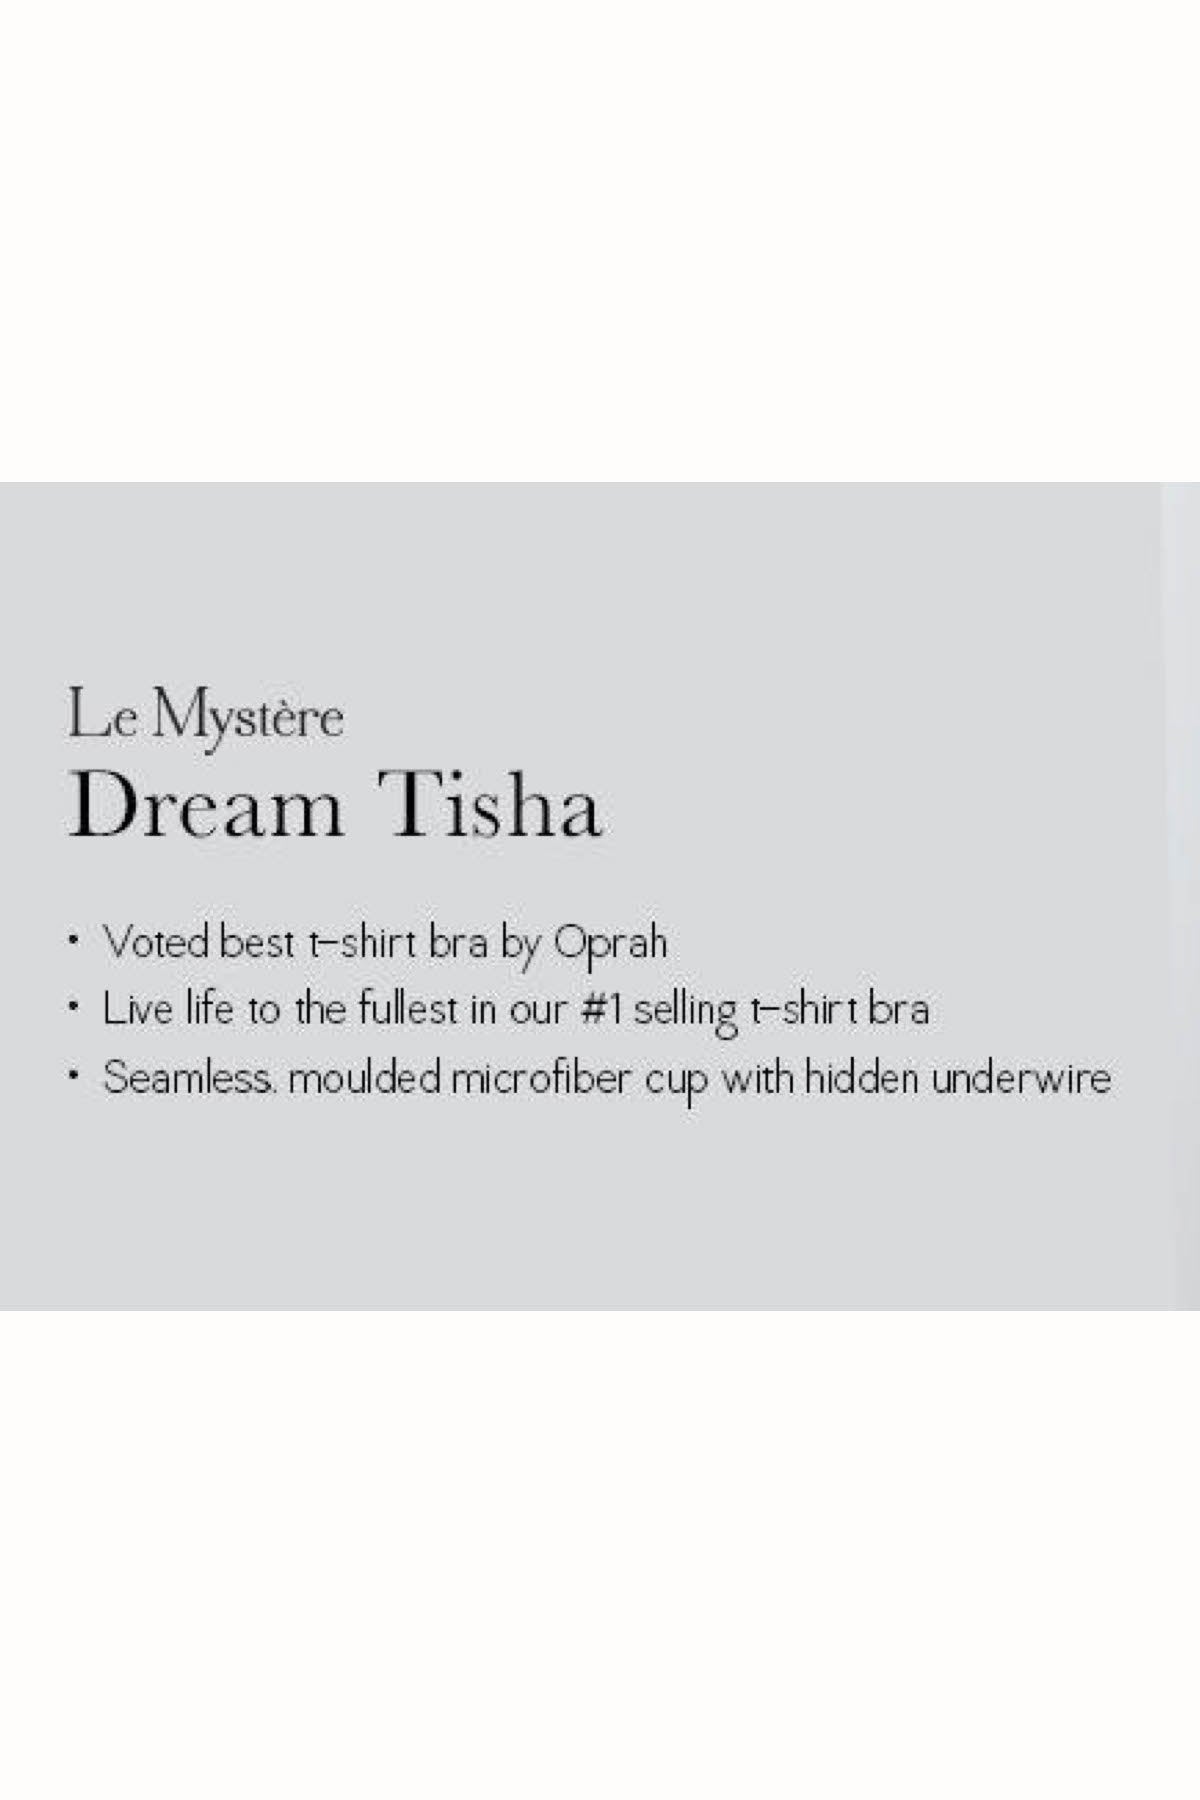 Le Mystere Natural Dream Tisha Oprah's Favorite T-Shirt Bra